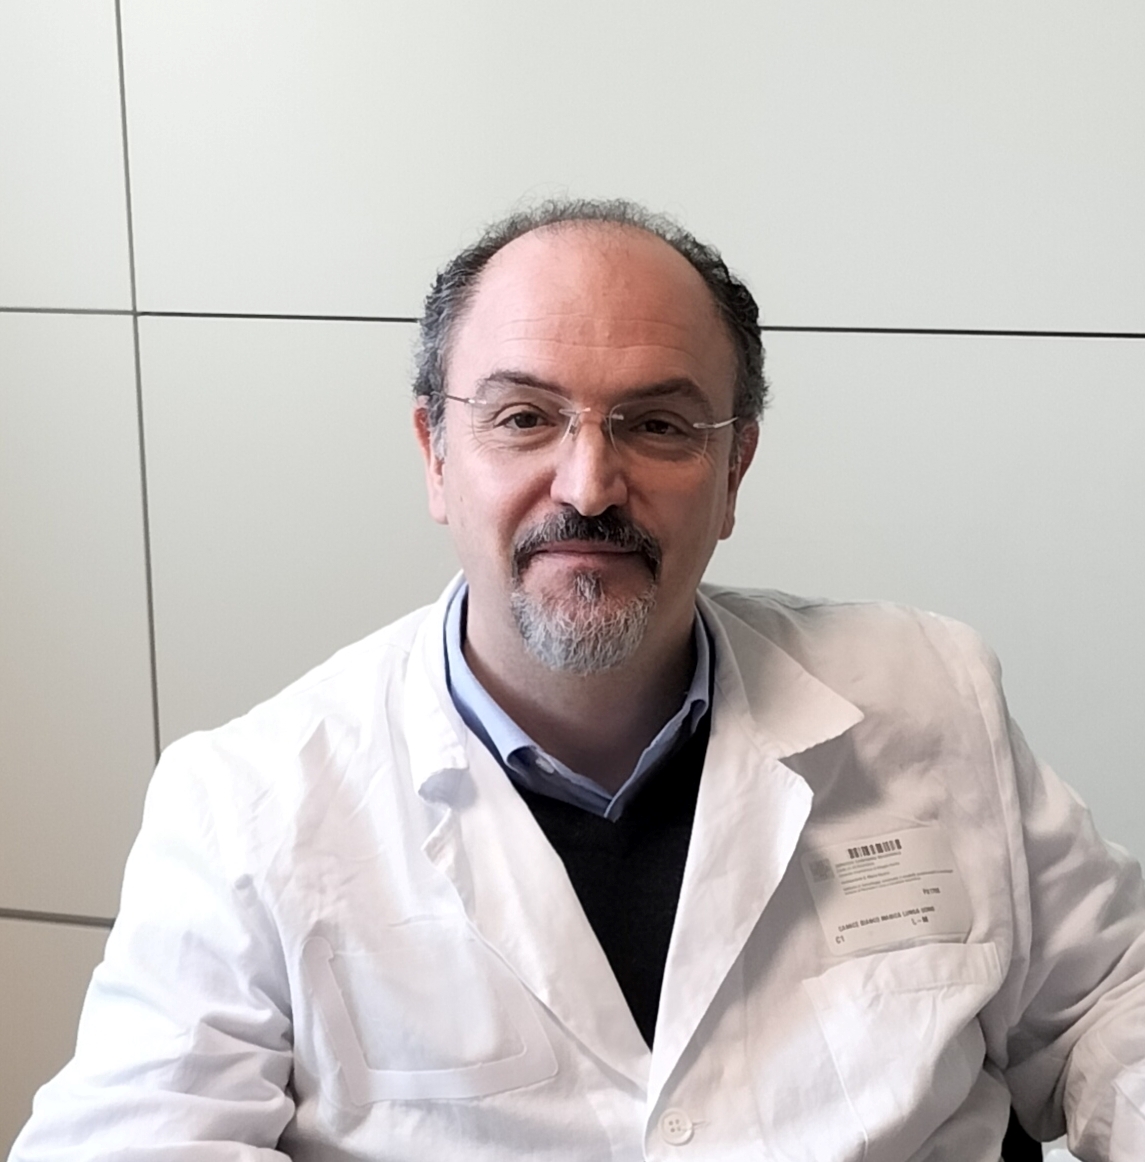 Il dr. Francesco Vercilli